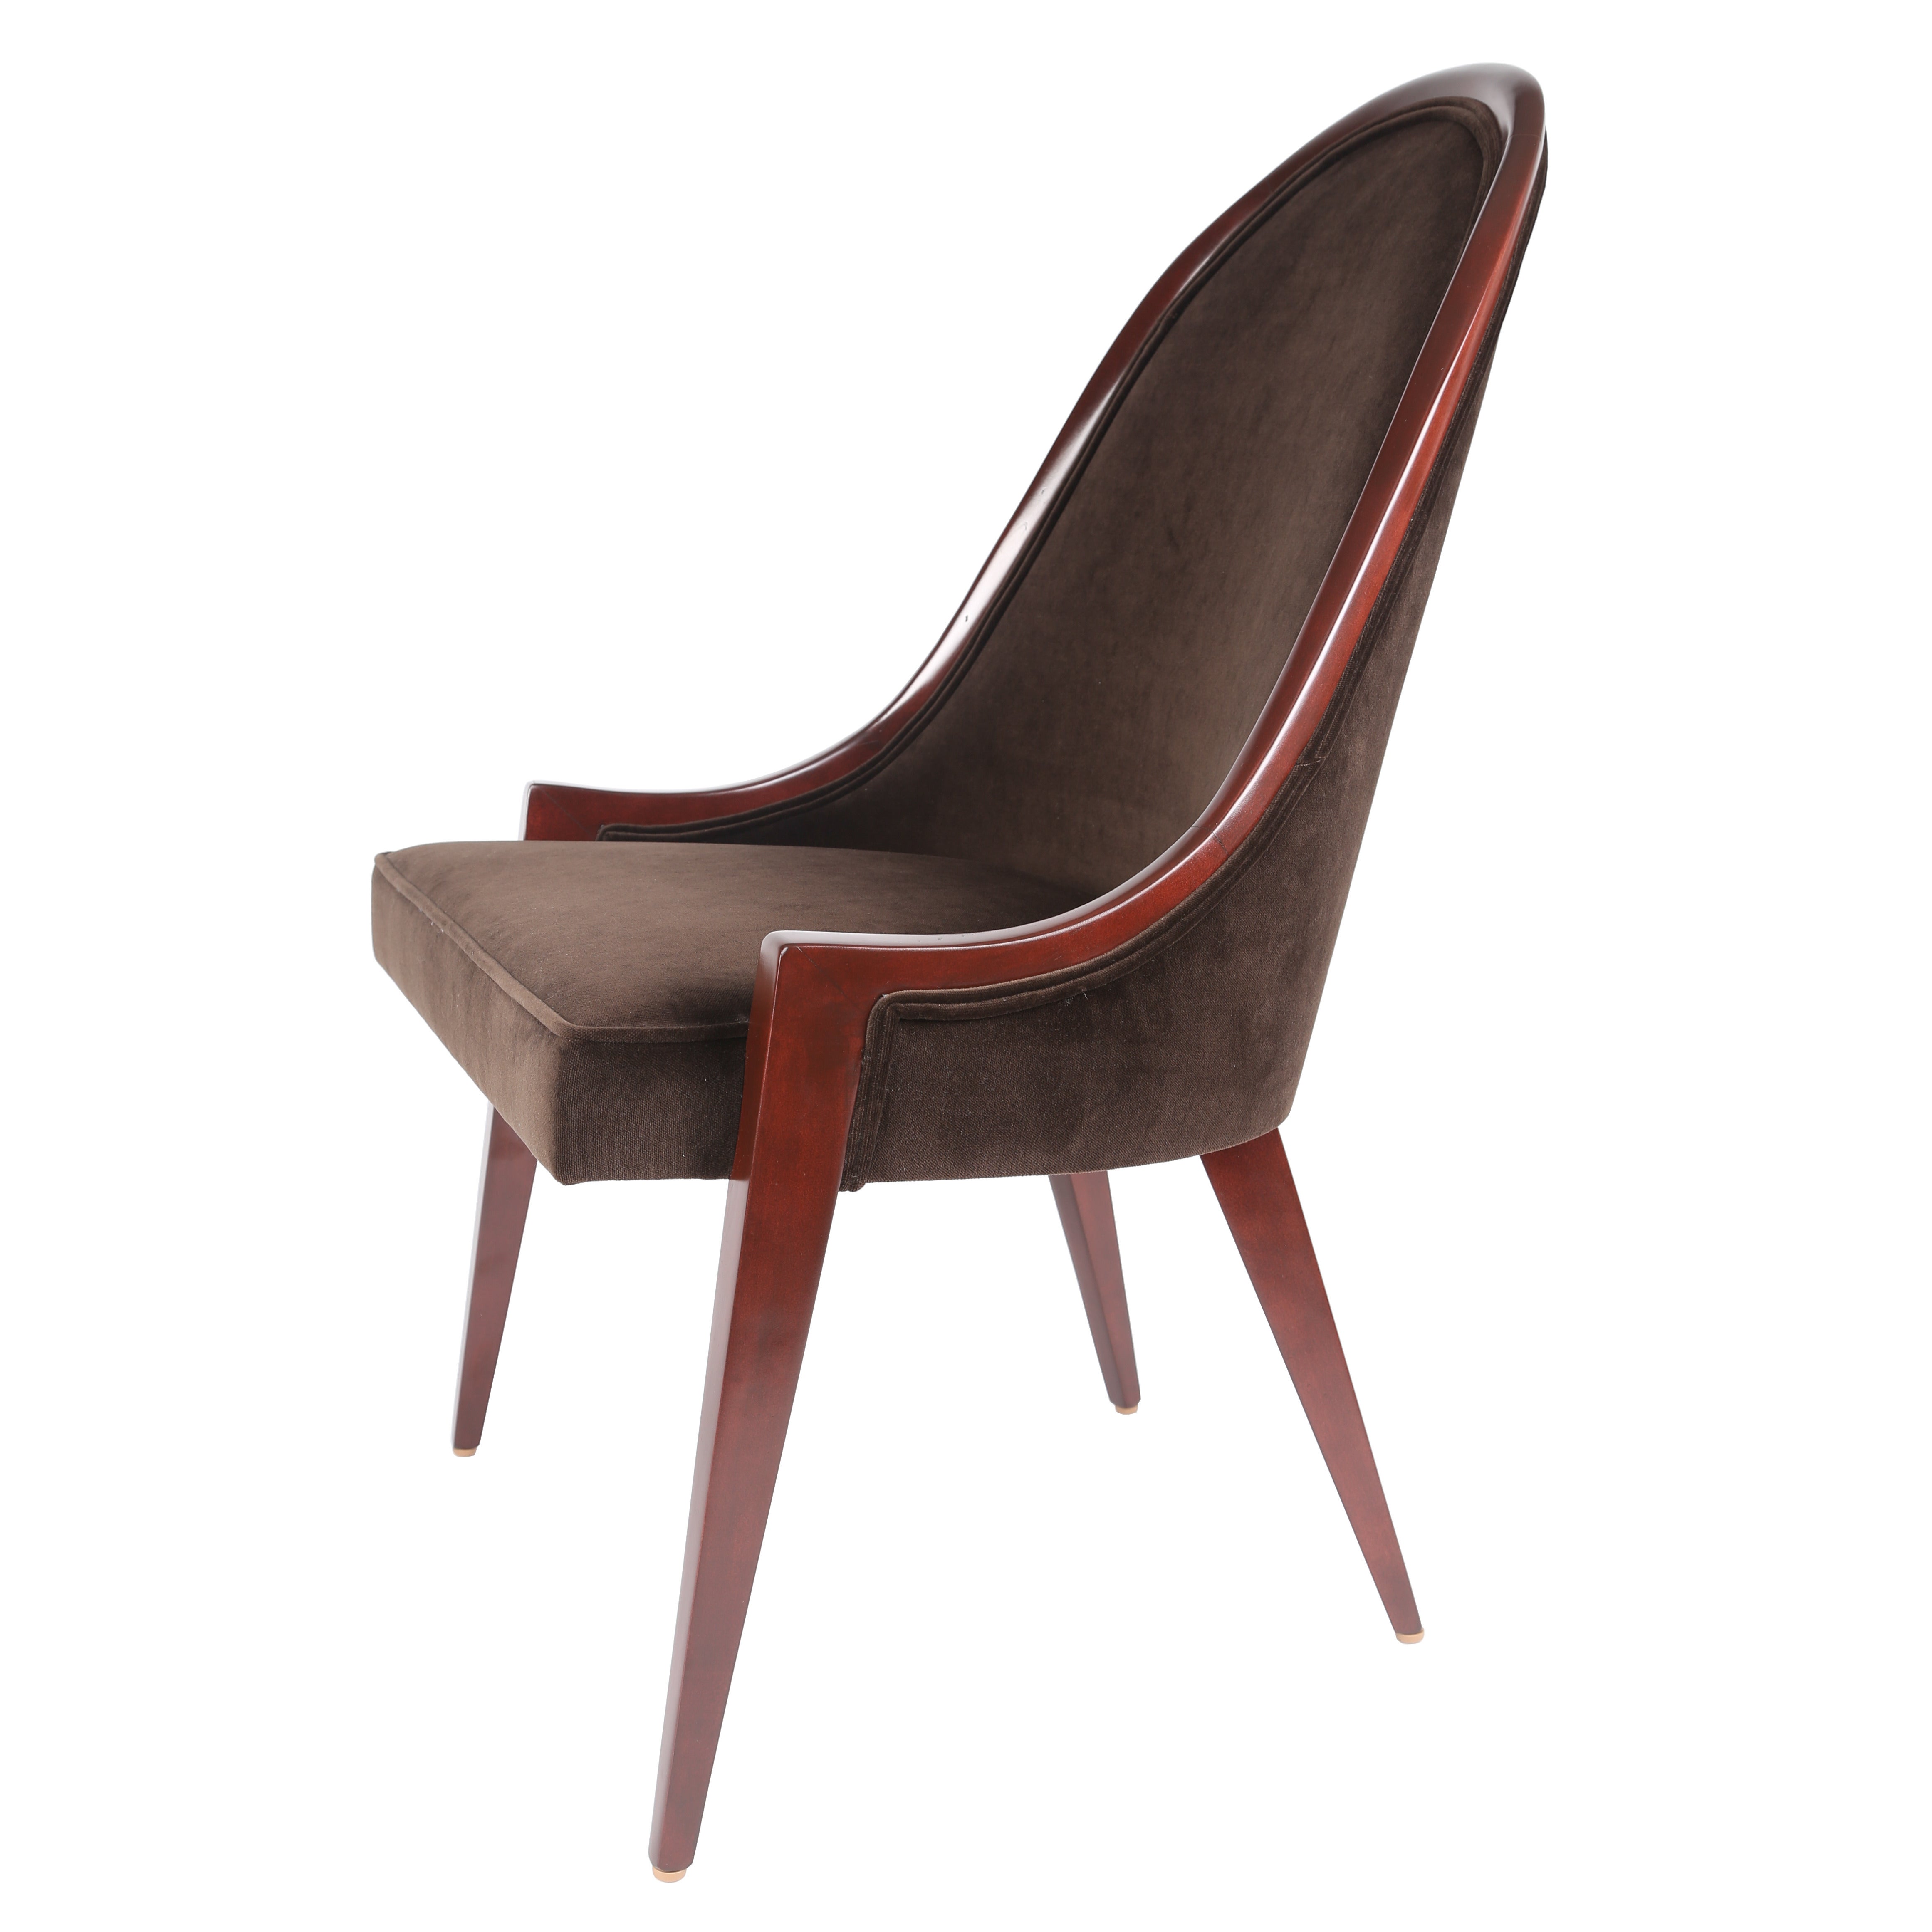 1950s Harvey Probber "Gondola" Lounge Chair